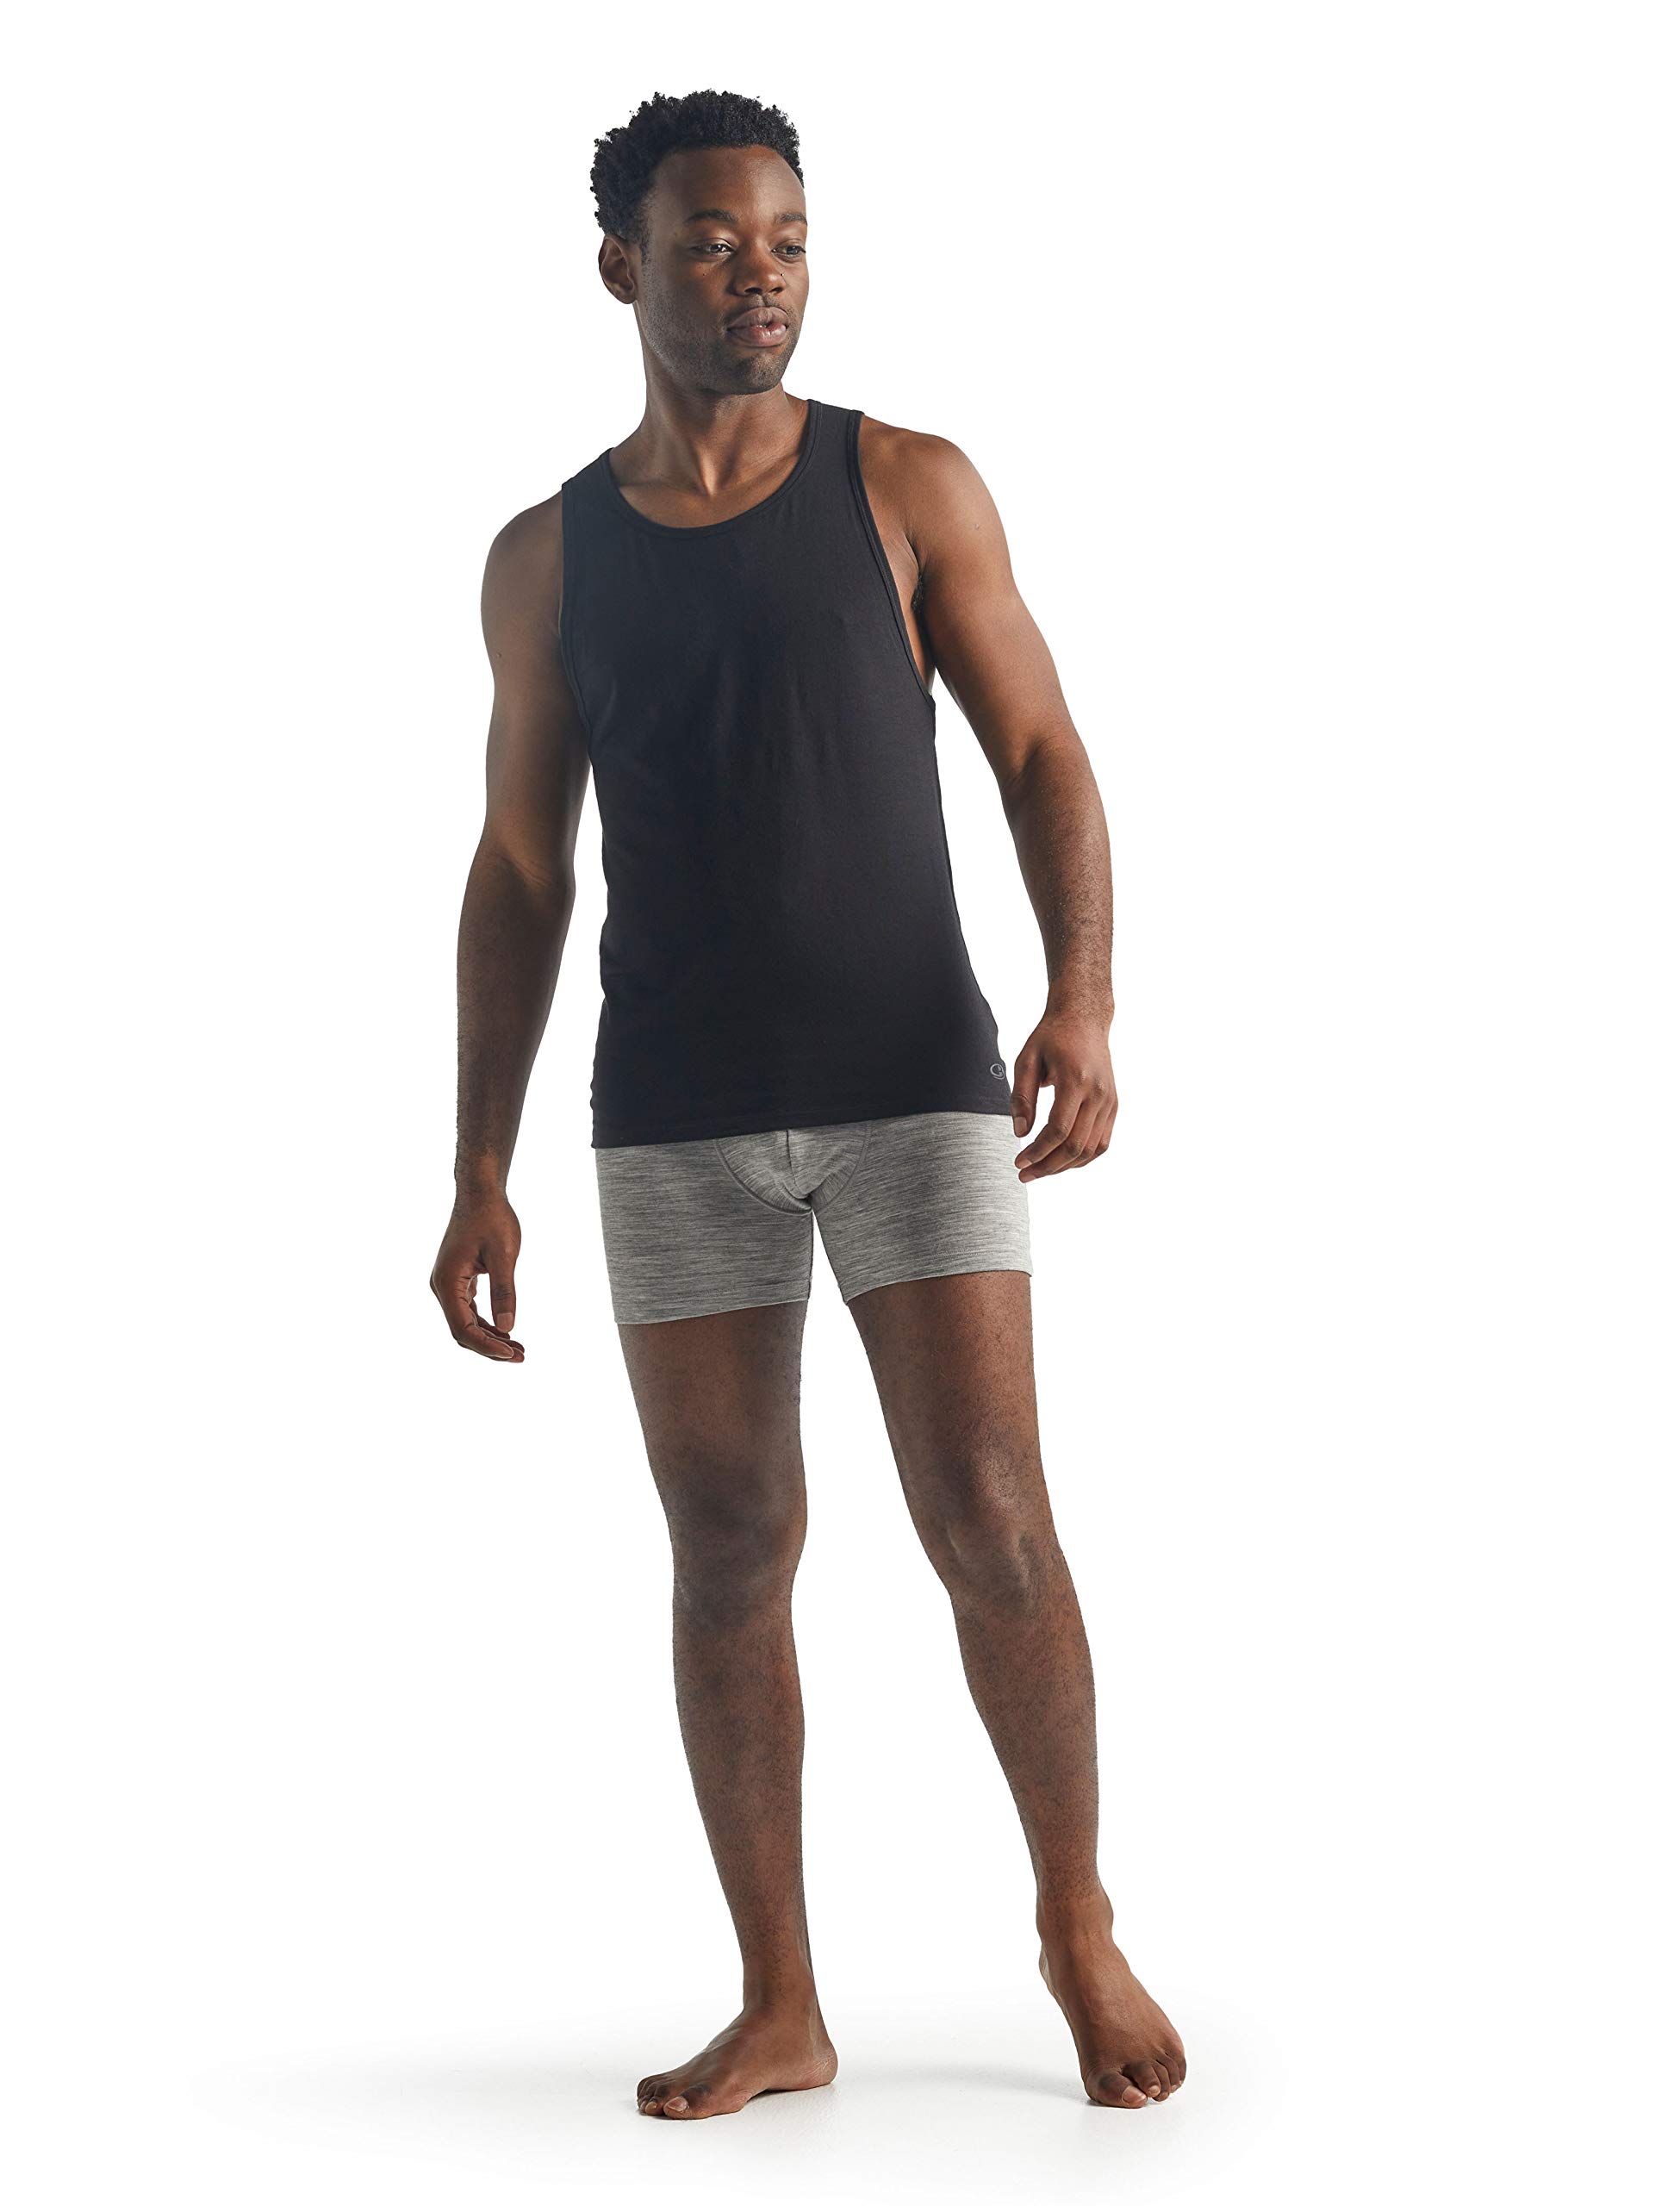 Icebreaker Merino Men's Anatomica Cold Weather Base Layer Thermal Sleeveless Tank Top Shirt